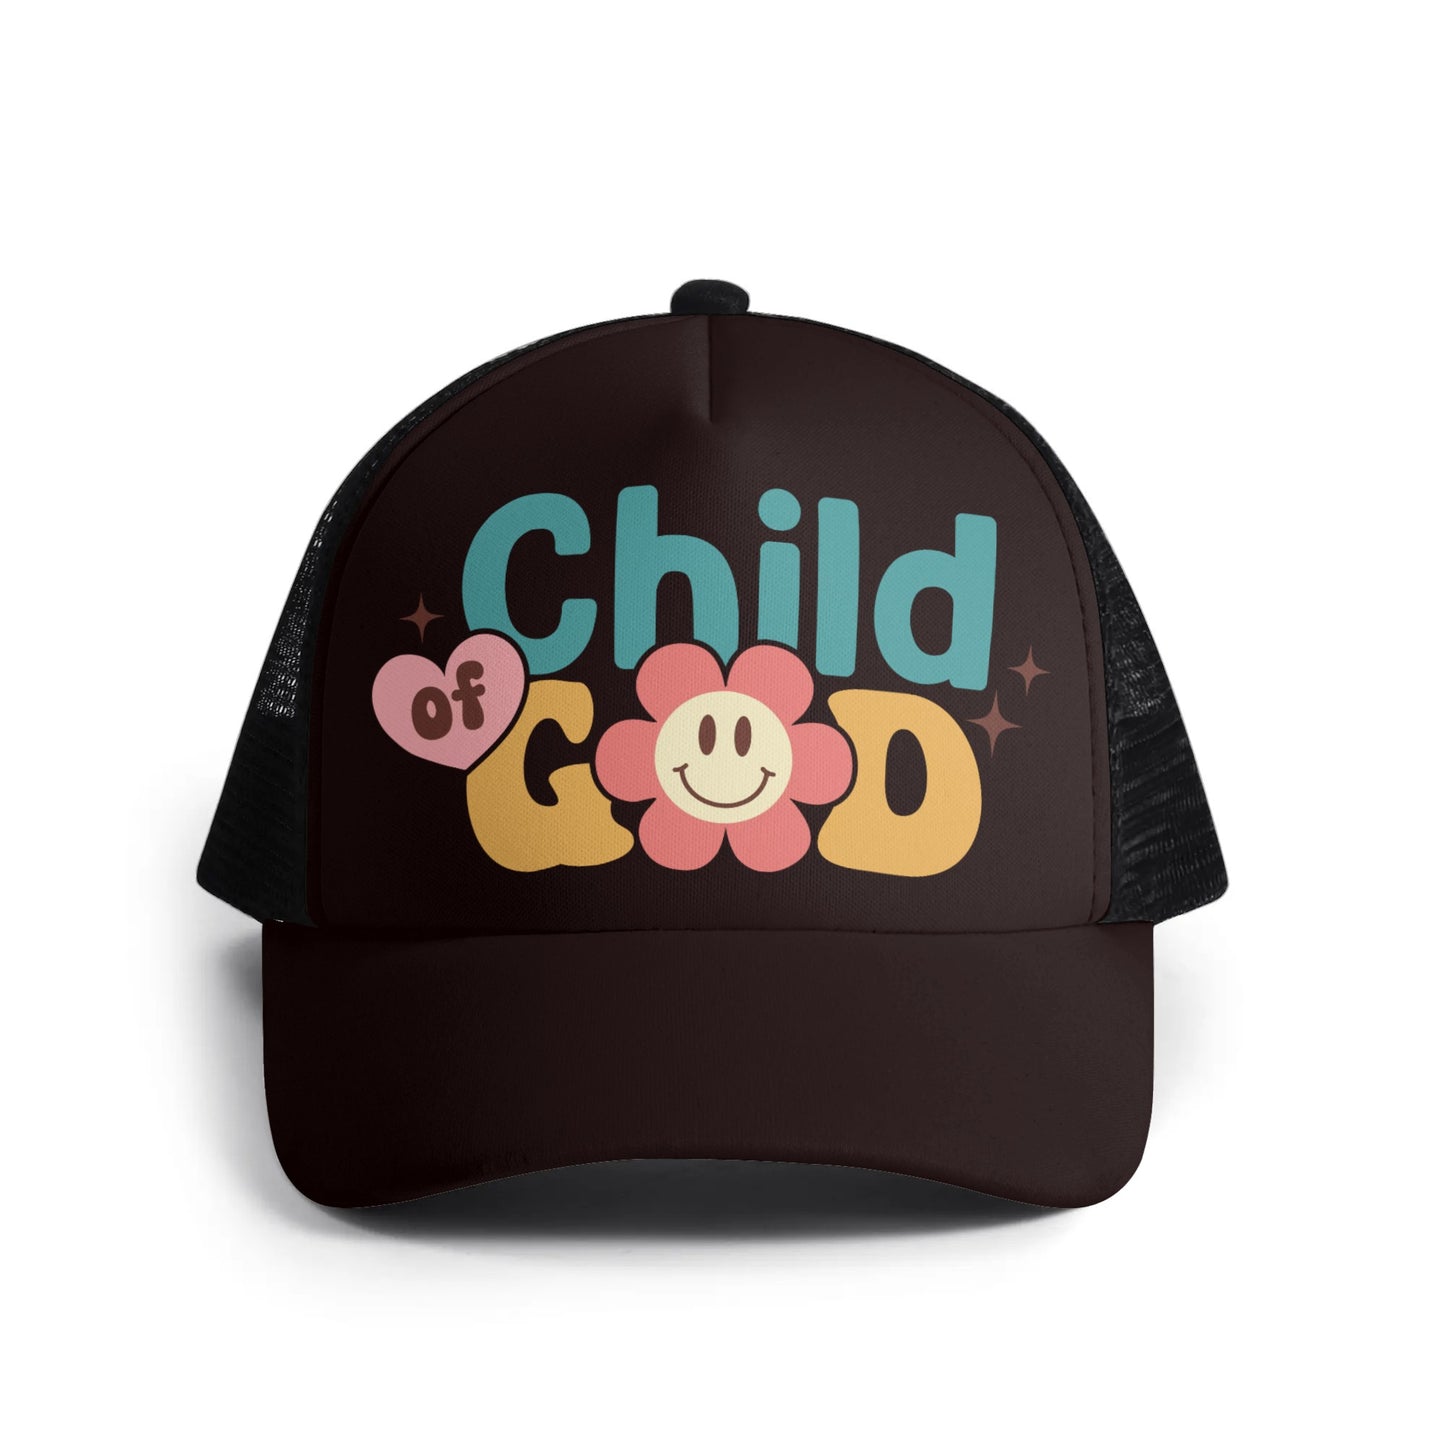 Child Of God Christian Kids Hat popcustoms